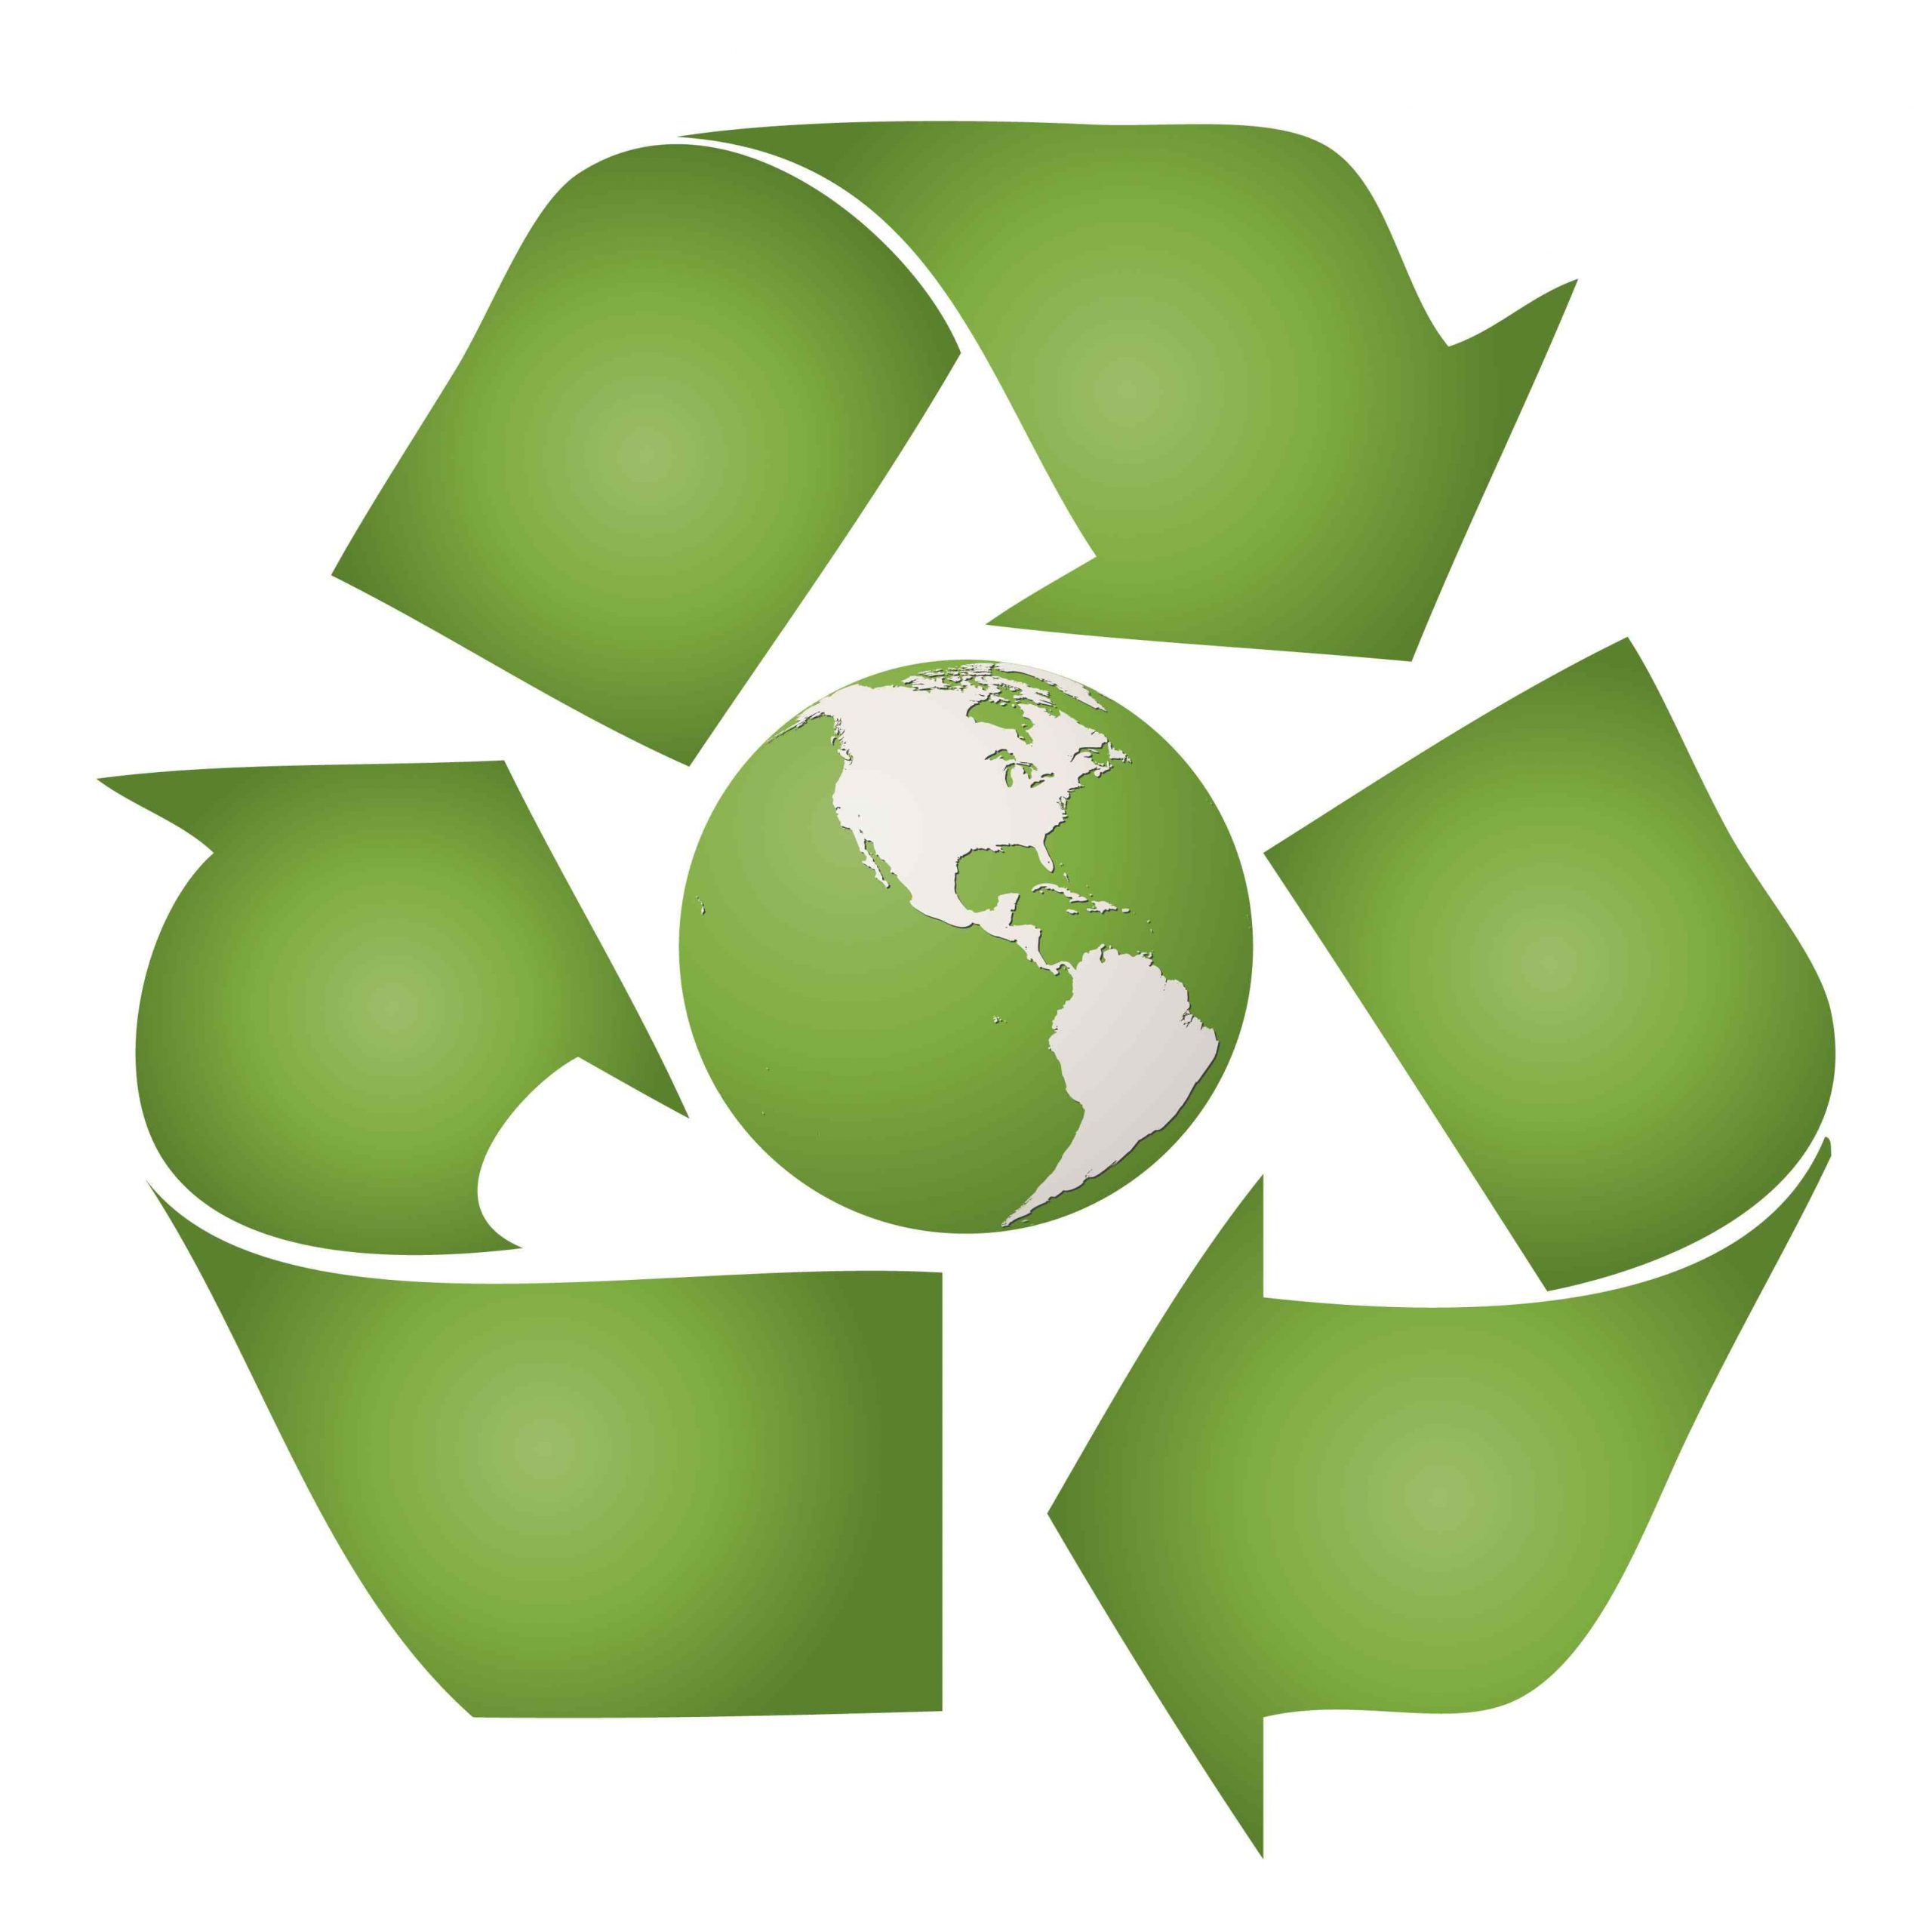 eco friendly symbol on a white background 2